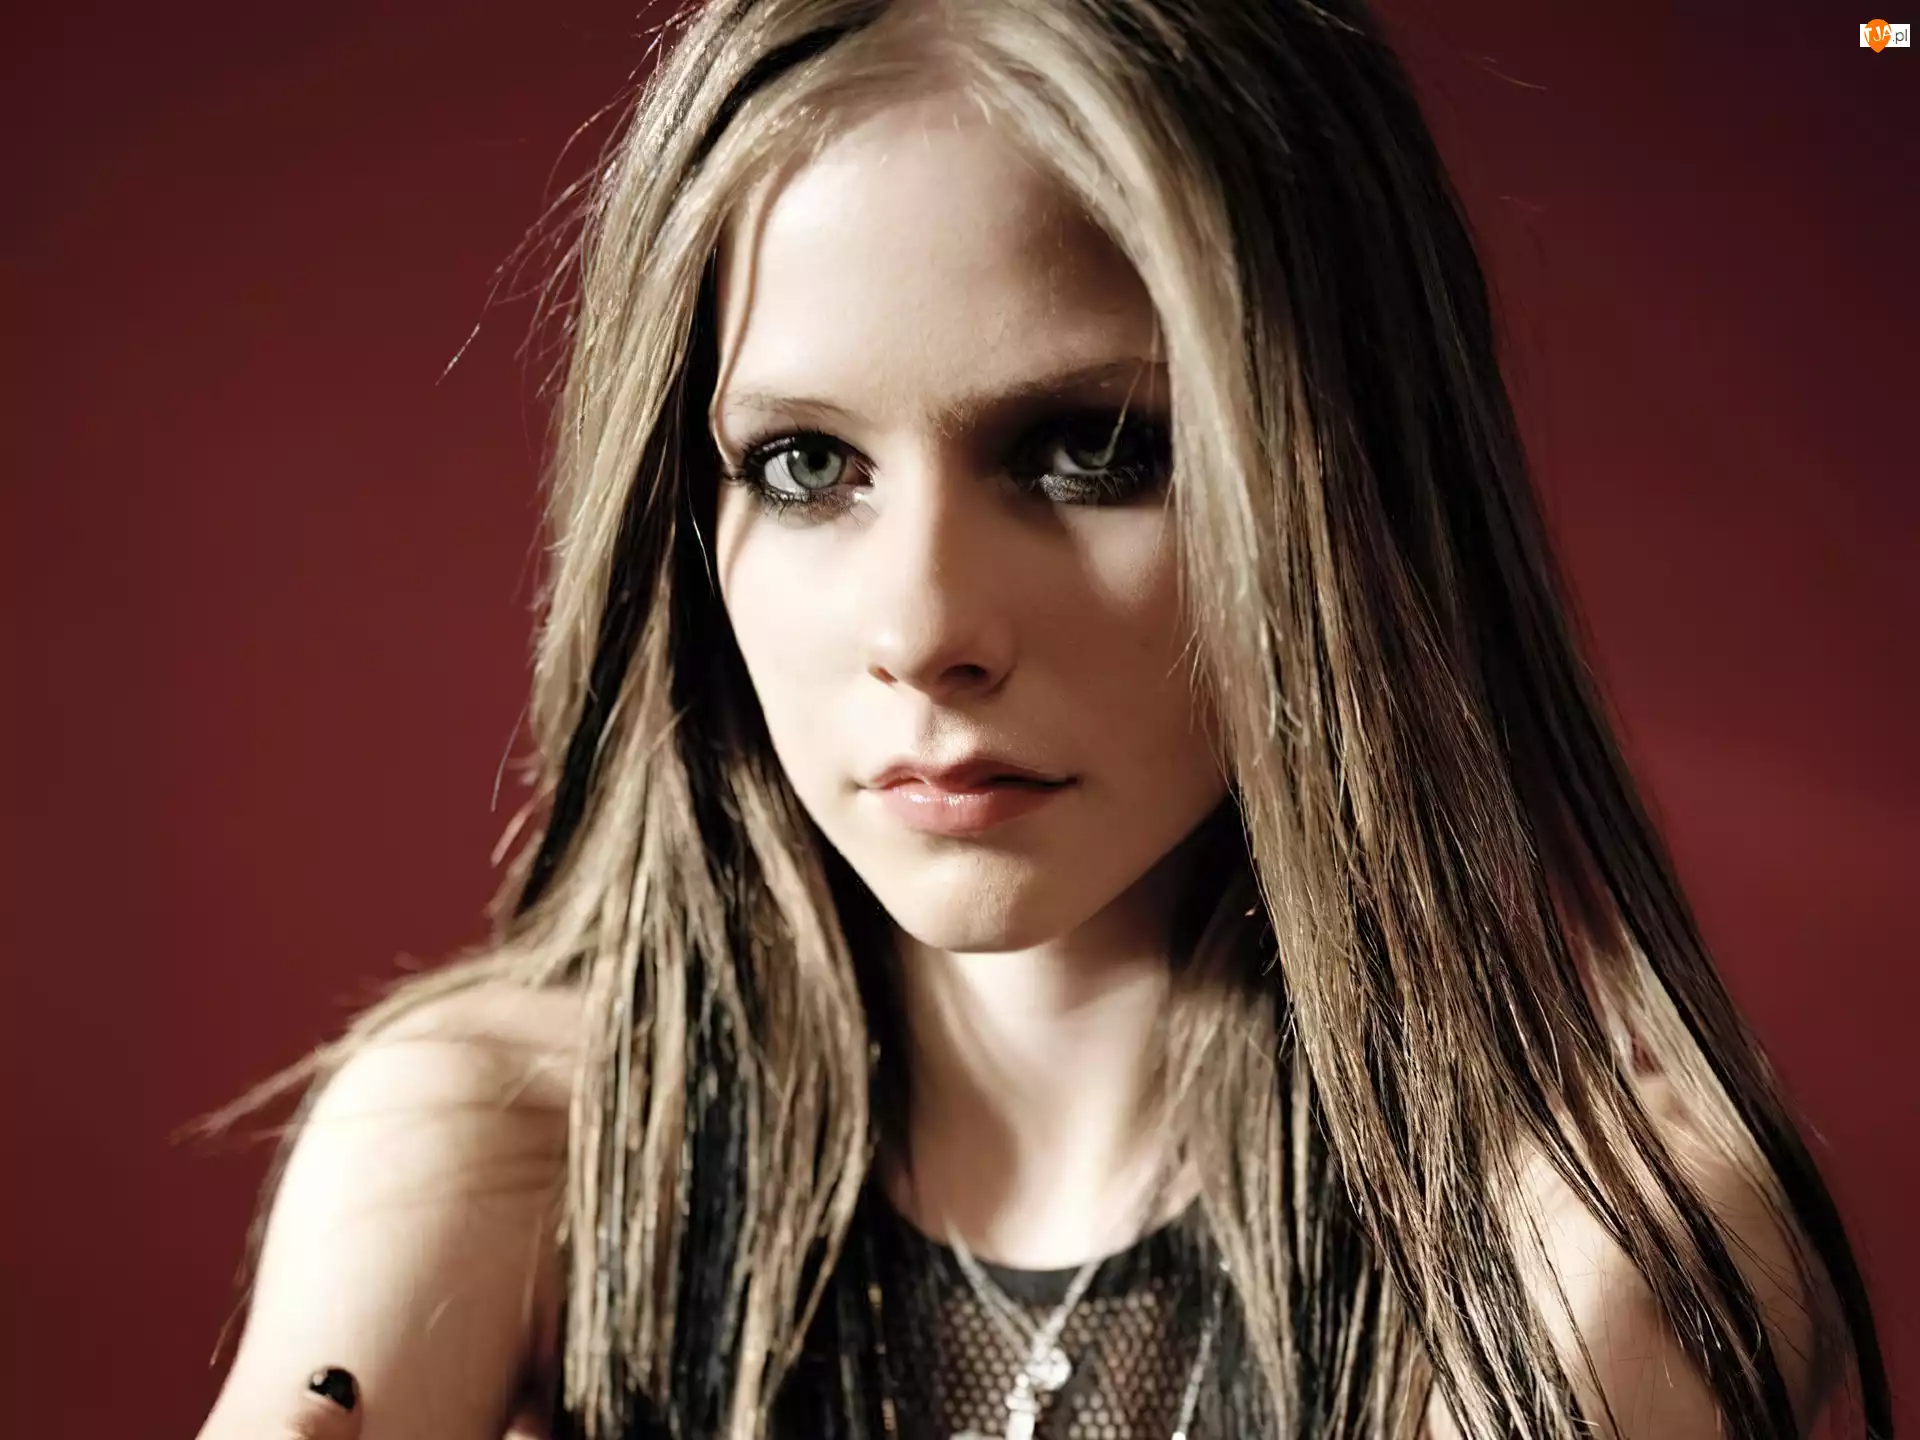 Buźka, Avril Lavigne